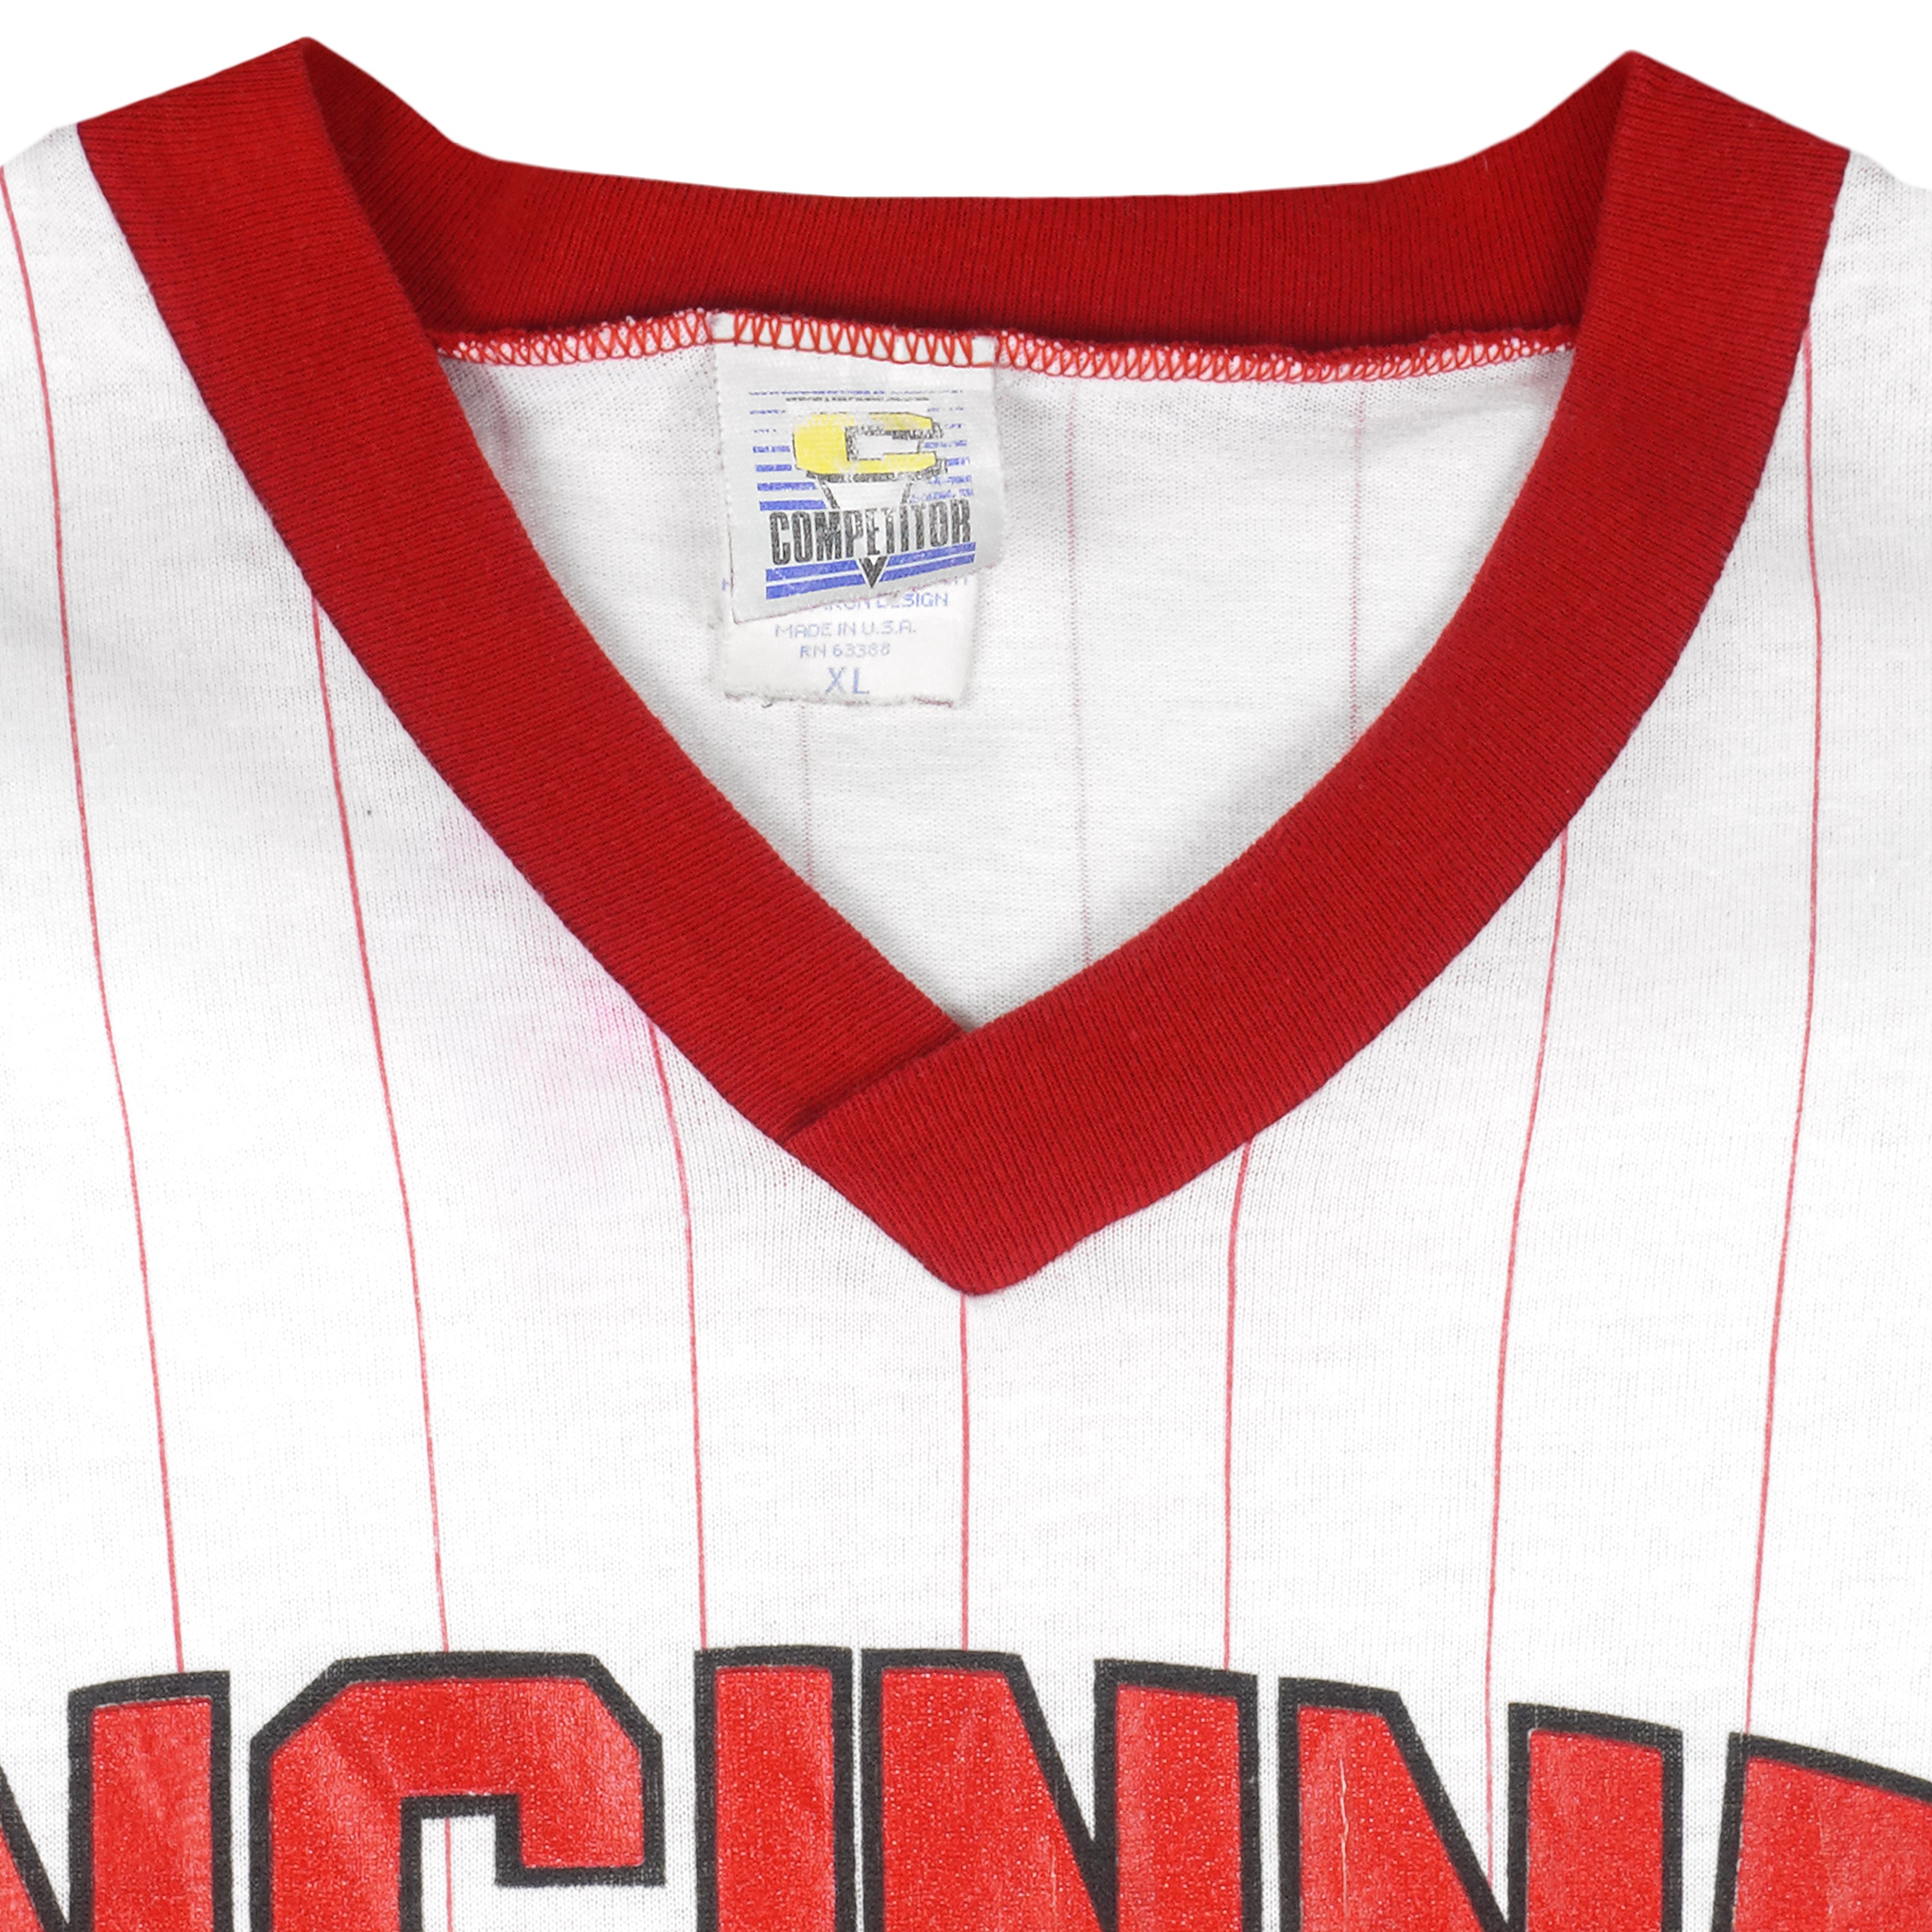 Vintage MLB Cincinnati Reds Tee Shirt 1988 Size Medium Made in USA NOS